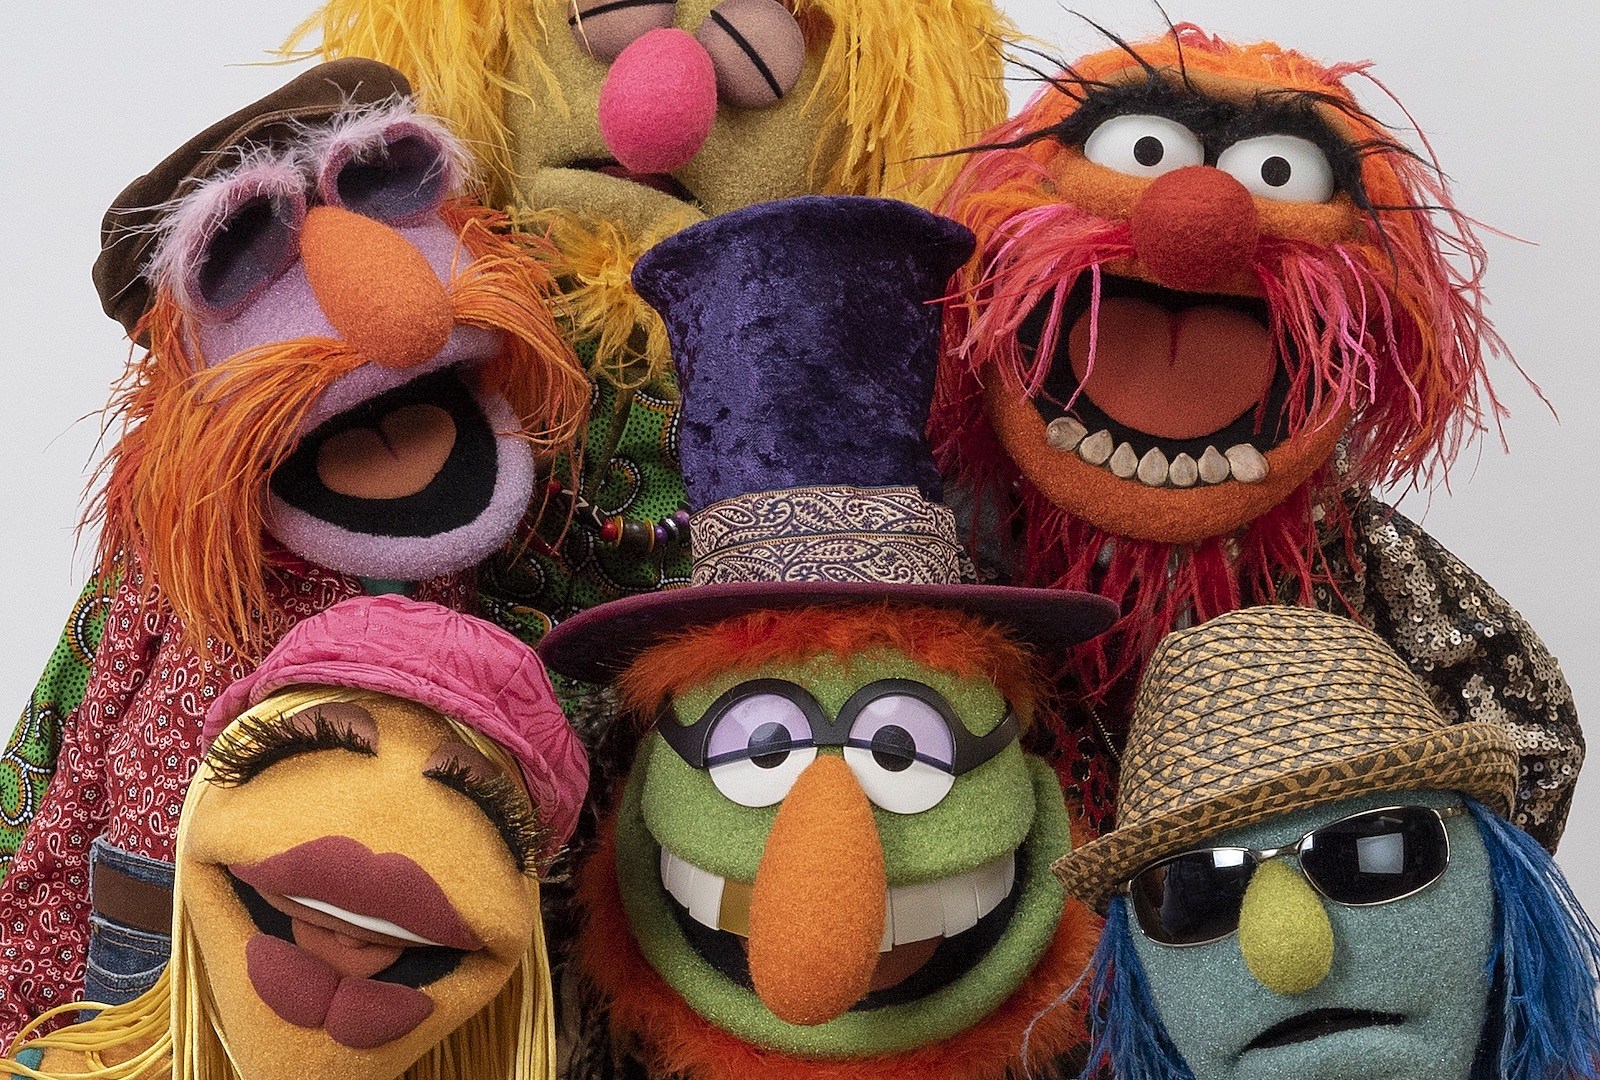 The Muppets Season 1